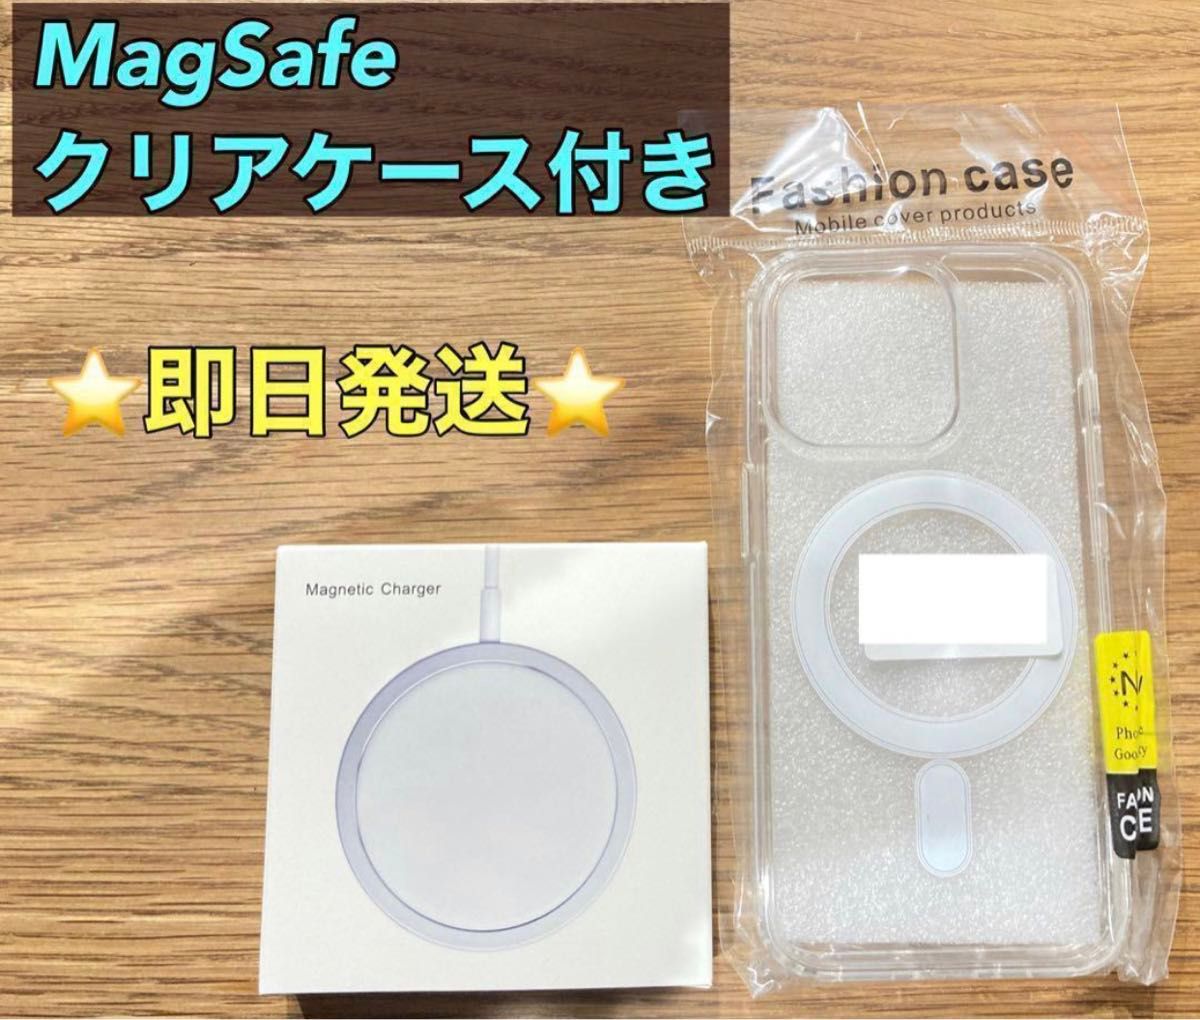 Magsafe マグセーフ ワイヤレス充電器 MagSafe対応クリアケース付き